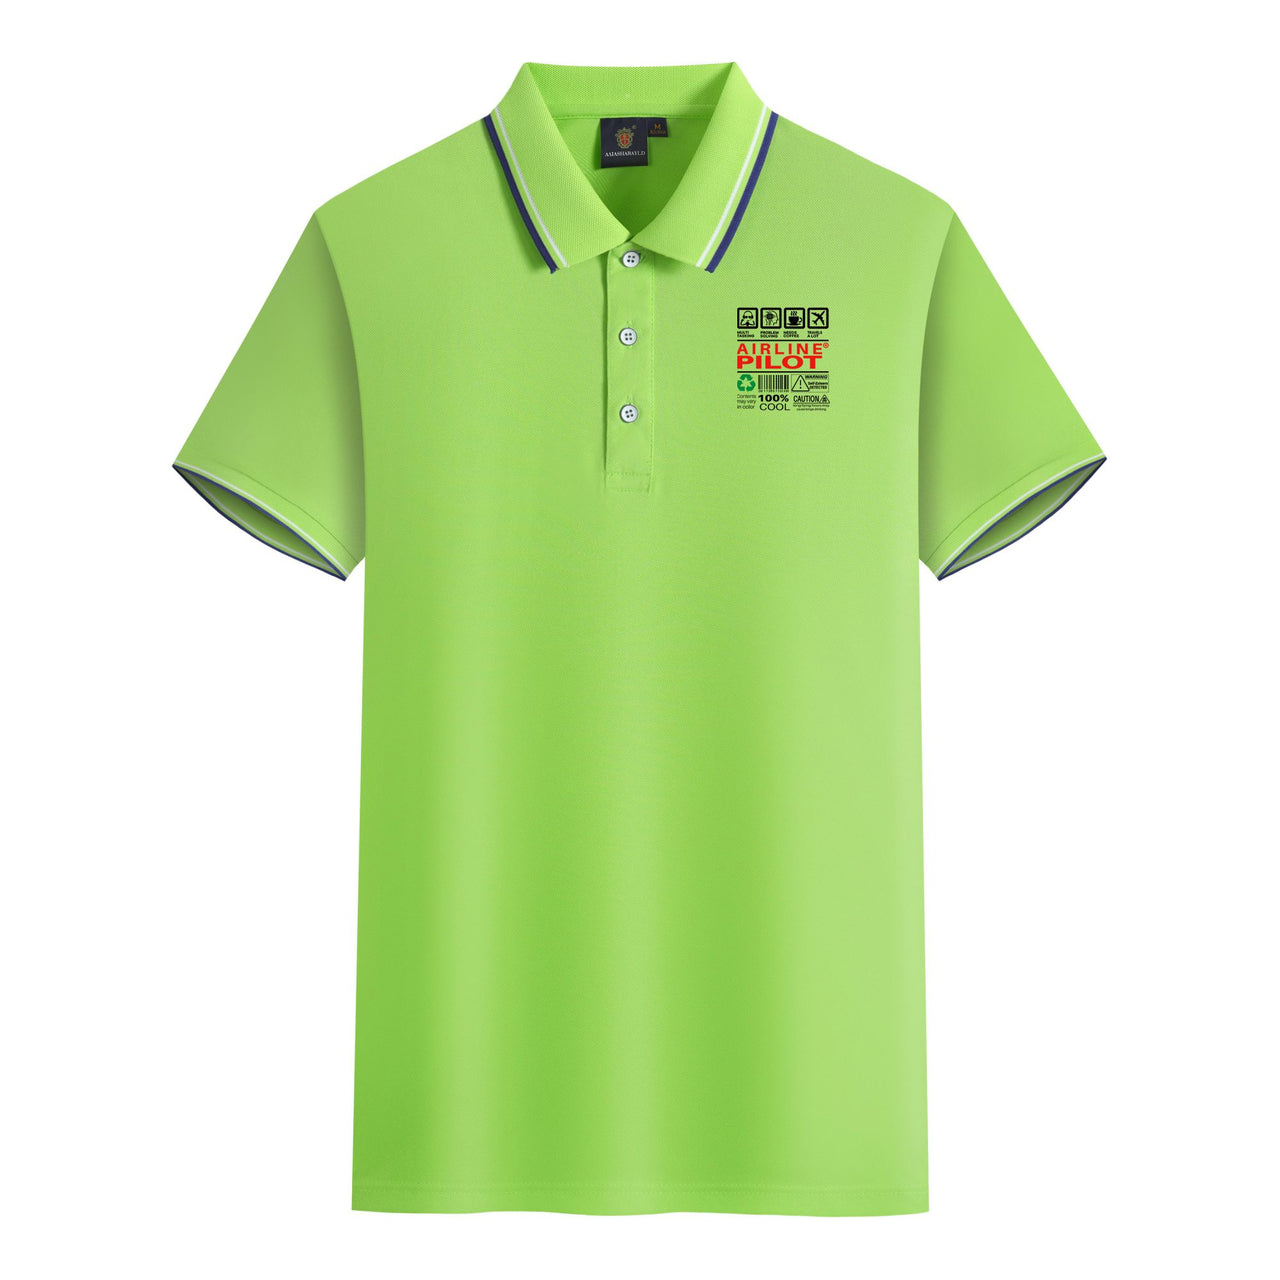 Airline Pilot Label Designed Stylish Polo T-Shirts